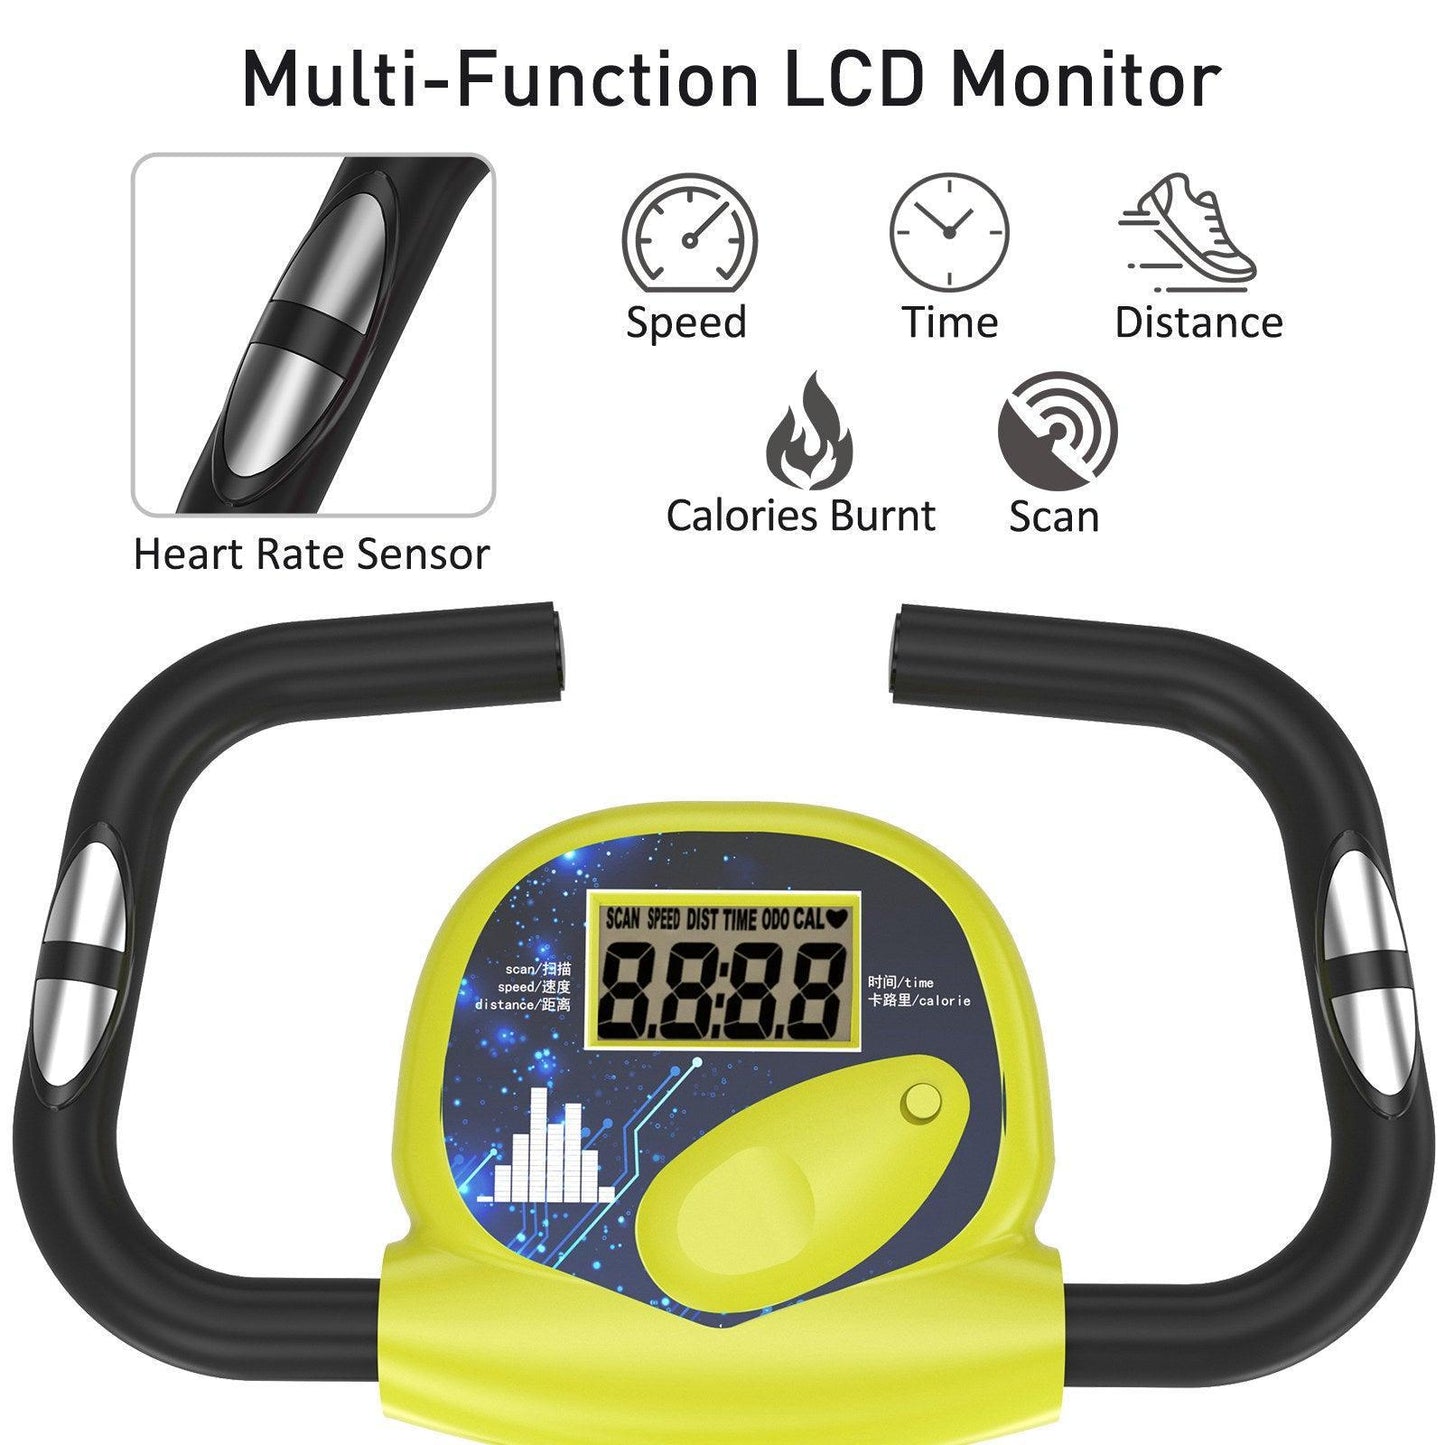 HOMCOM Yellow Exercise Bike with LCD Monitor - ALL4U RETAILER LTD